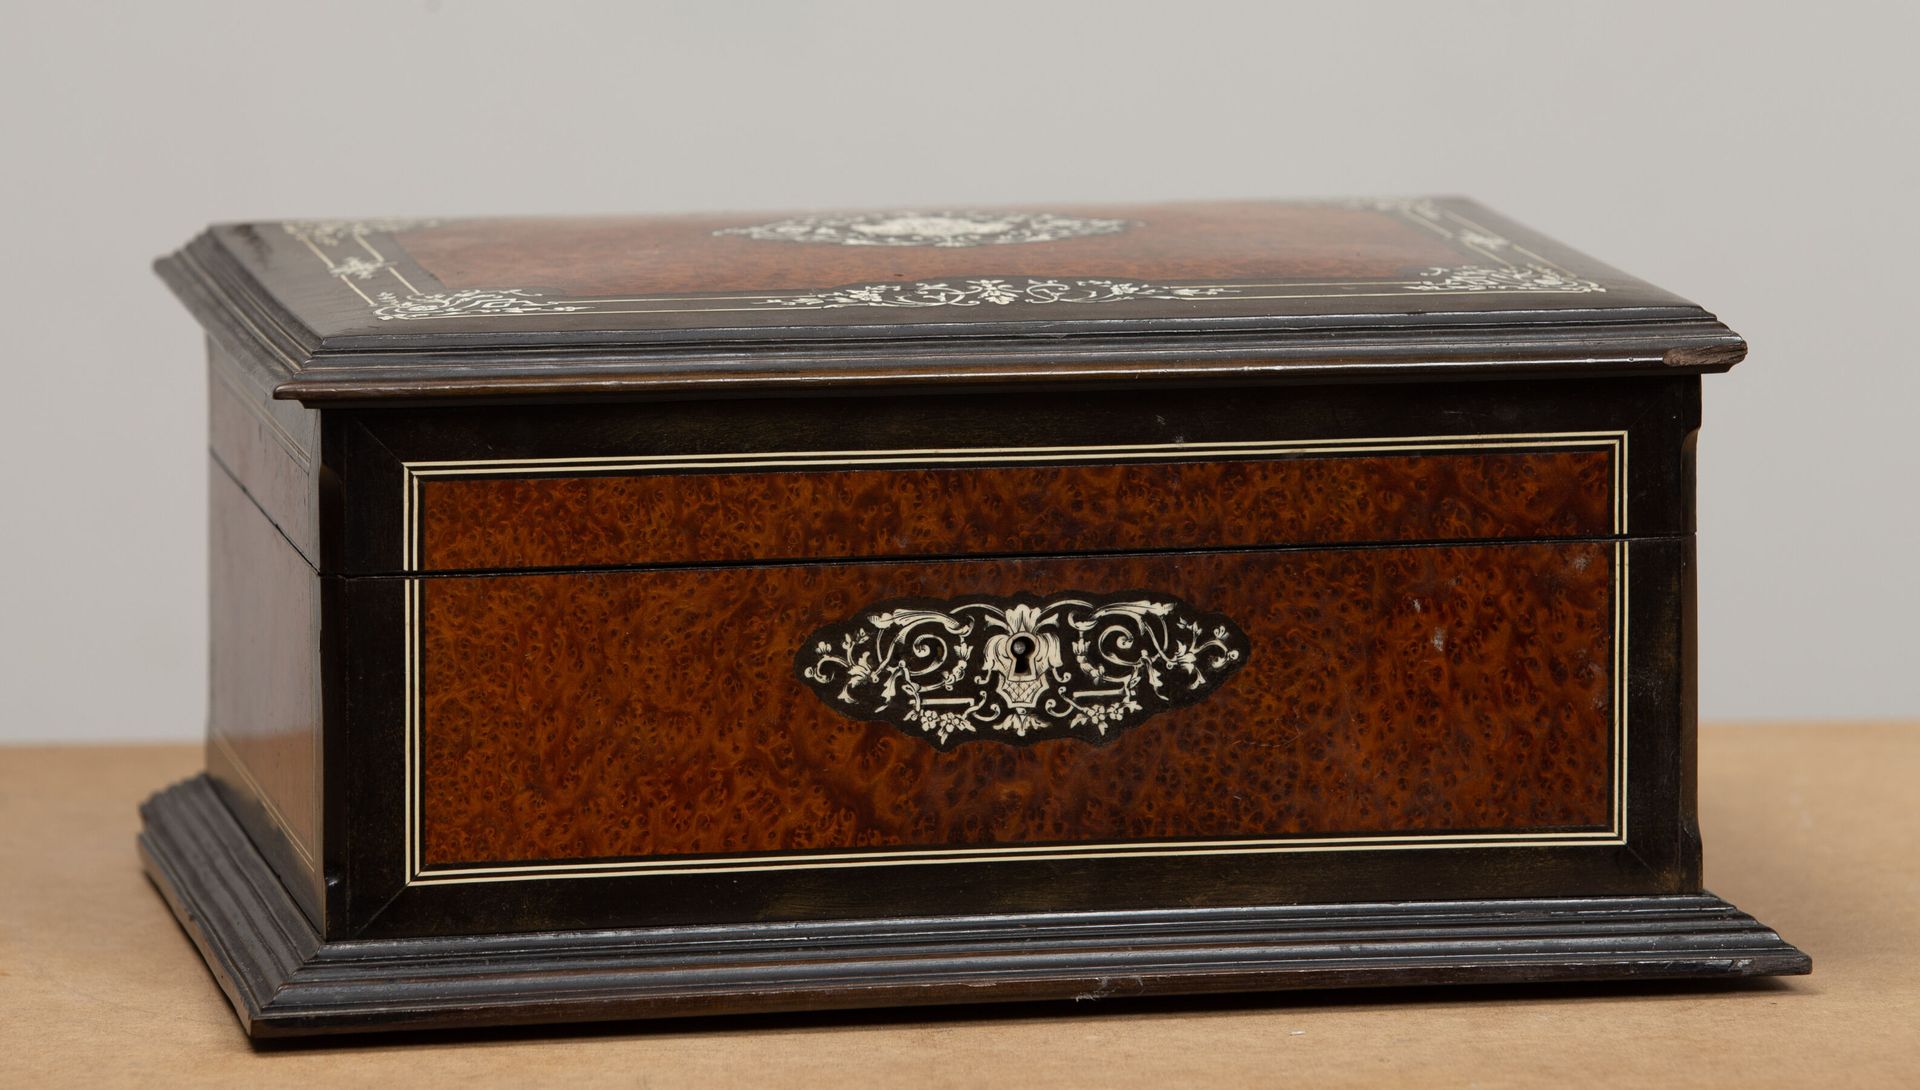 Null 树瘤皮和发黑的木质珠宝盒，装饰有骨质镶嵌，有 "ES "字样。
拿破仑三世时期。
标签 "P.Pignot, 53 passage des panor&hellip;